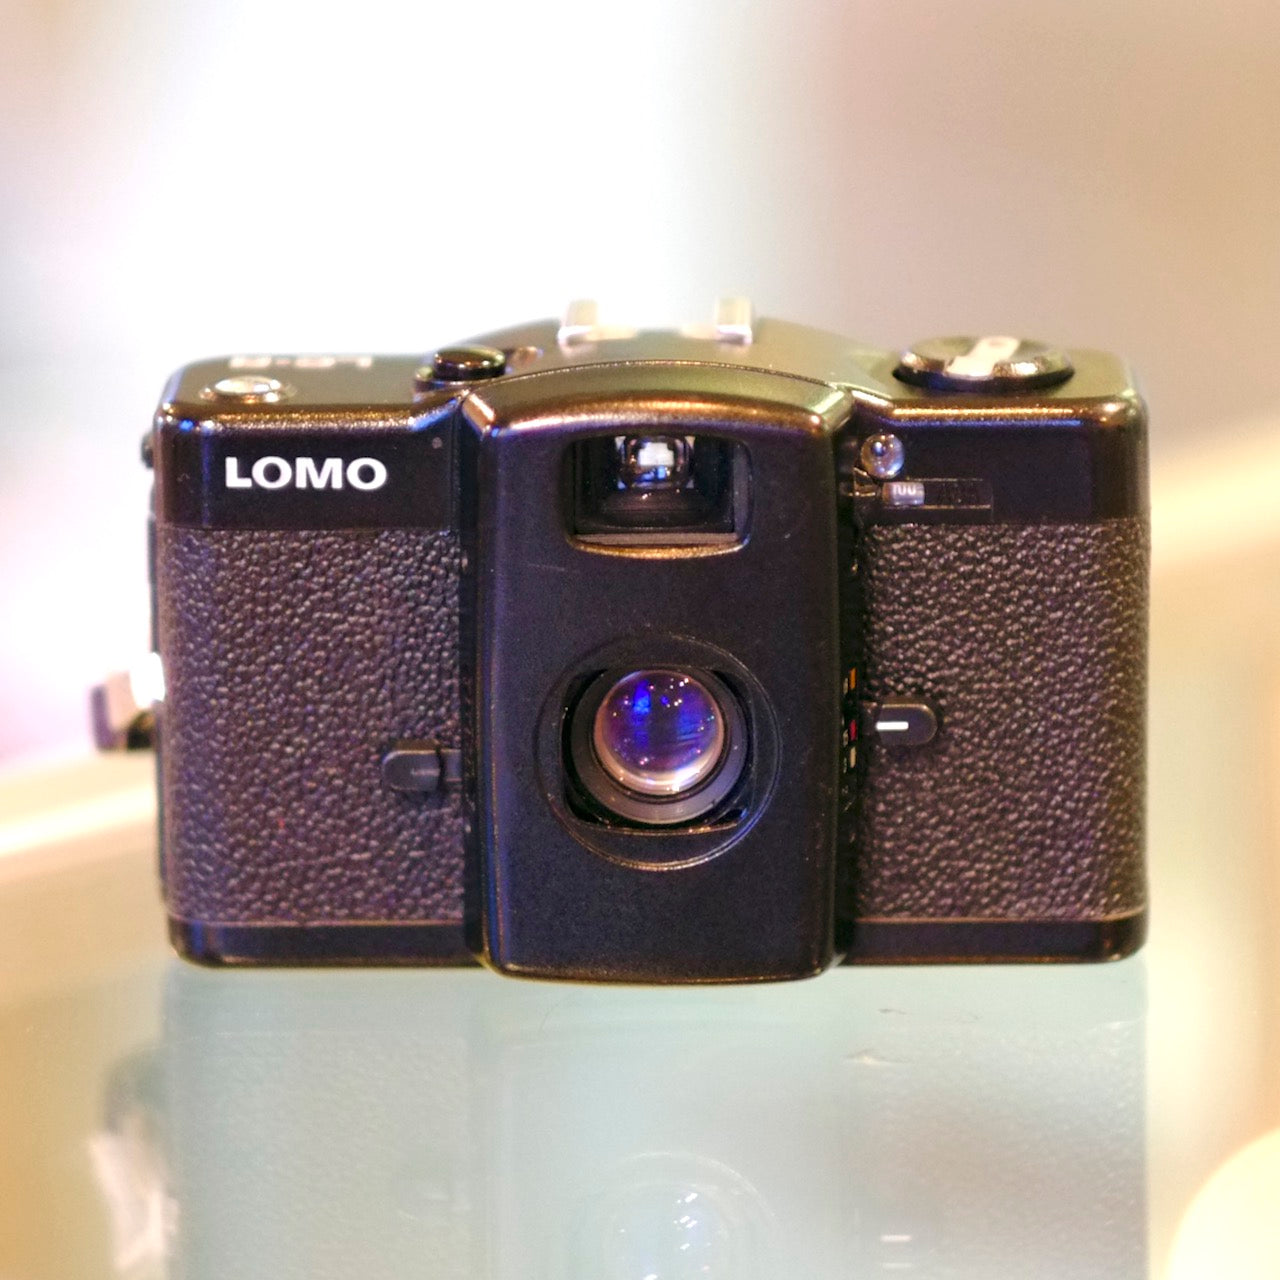 Lomo LC-A